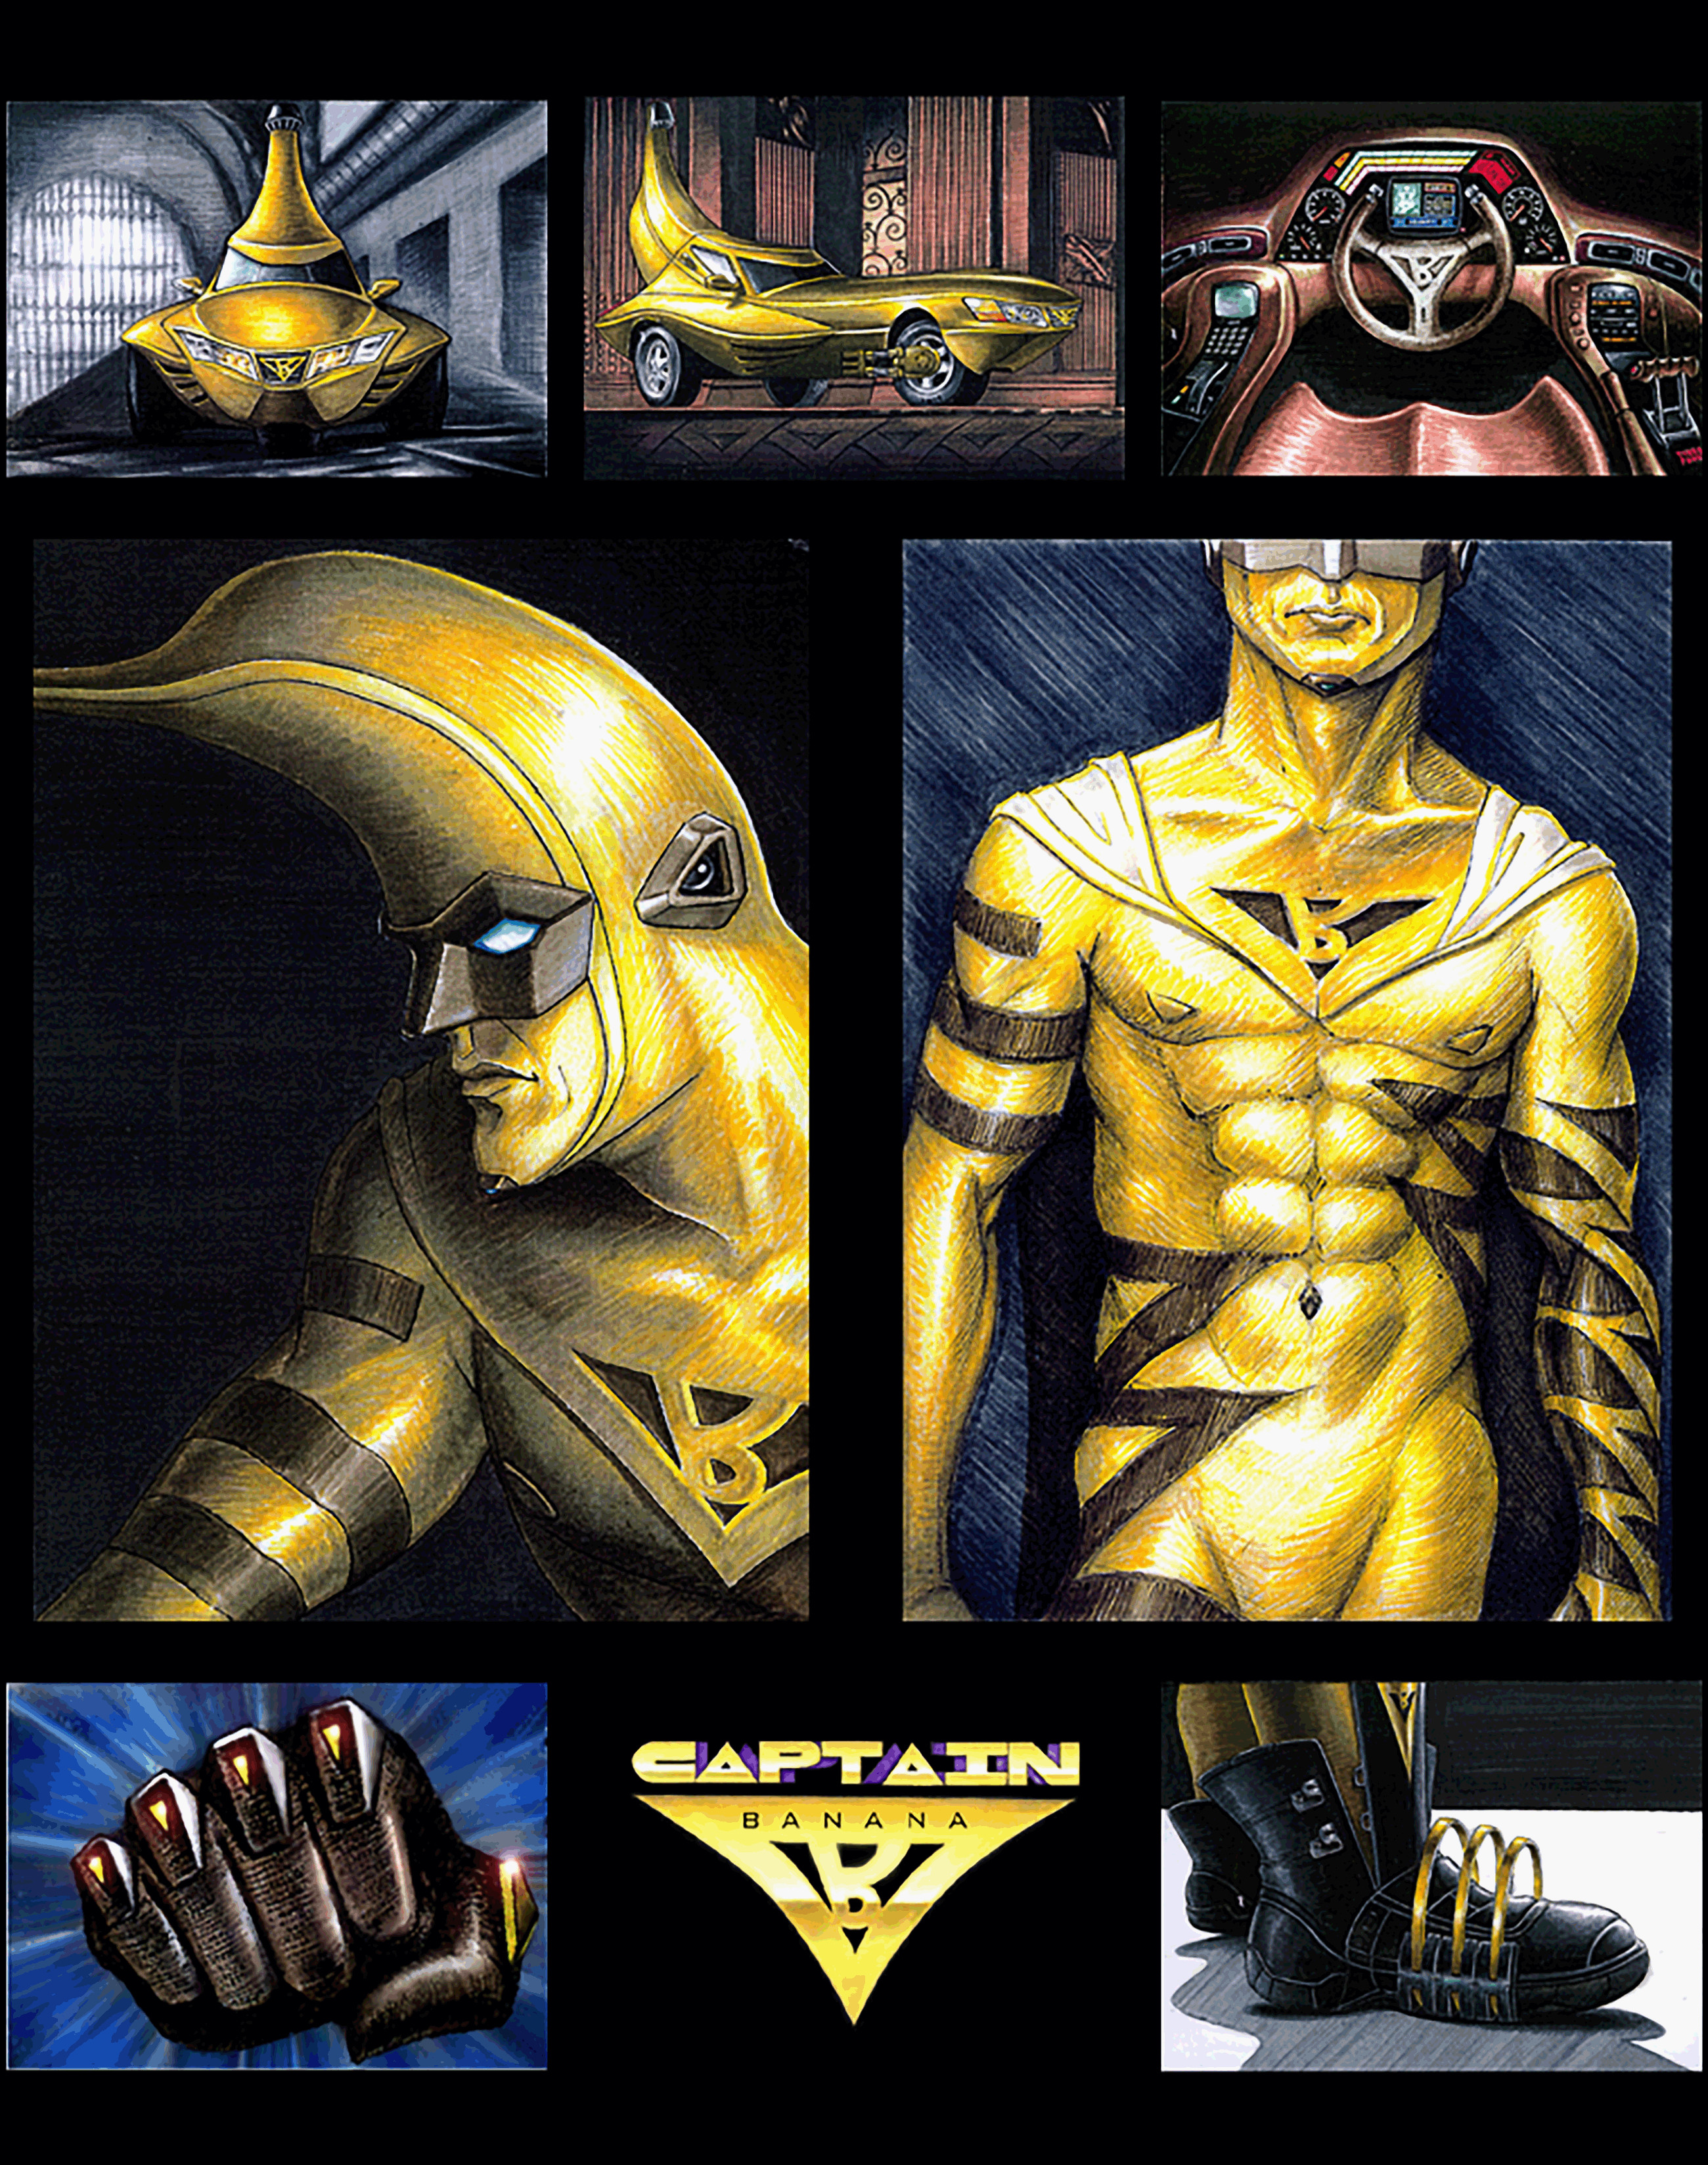 (1997) Captain Banana - Promotional Art